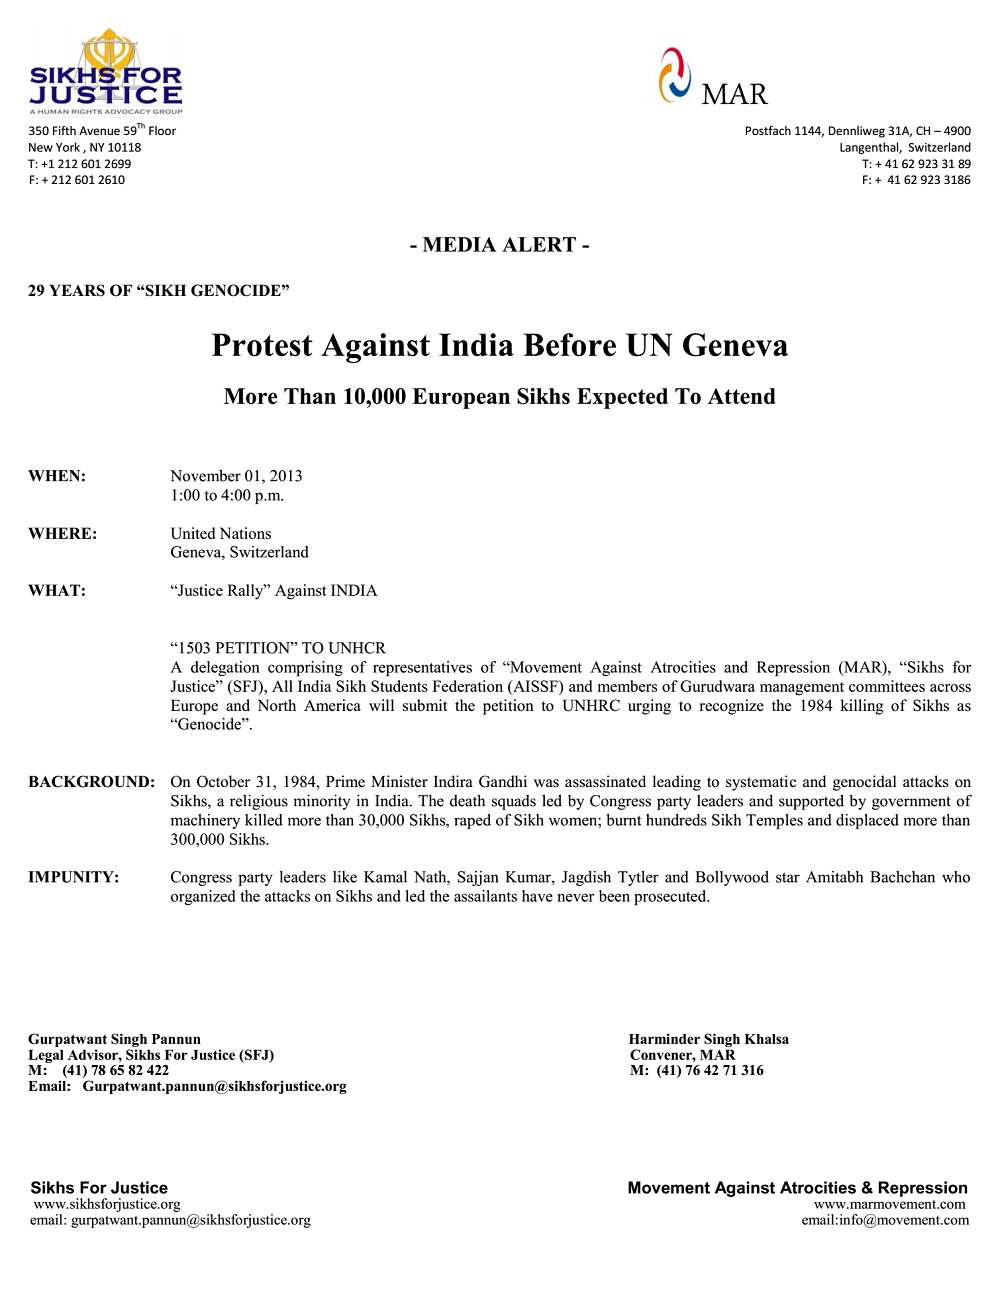 Protest Against India Before UN Geneva On November 1